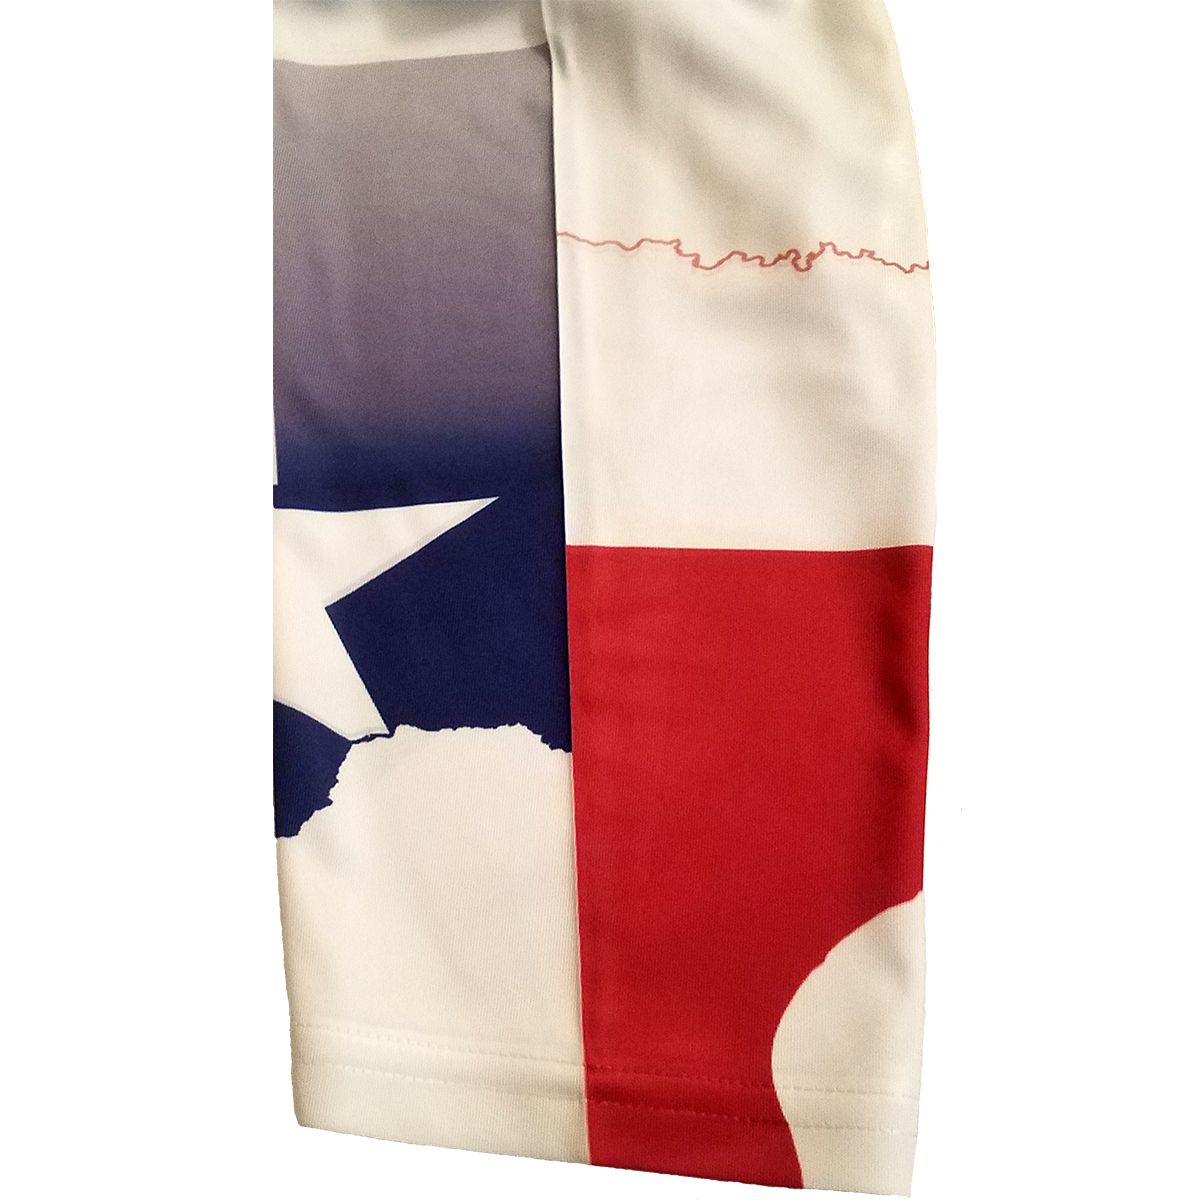 Texas Redfish Fishing Shirt with Flag Sleeve - Skiff Life